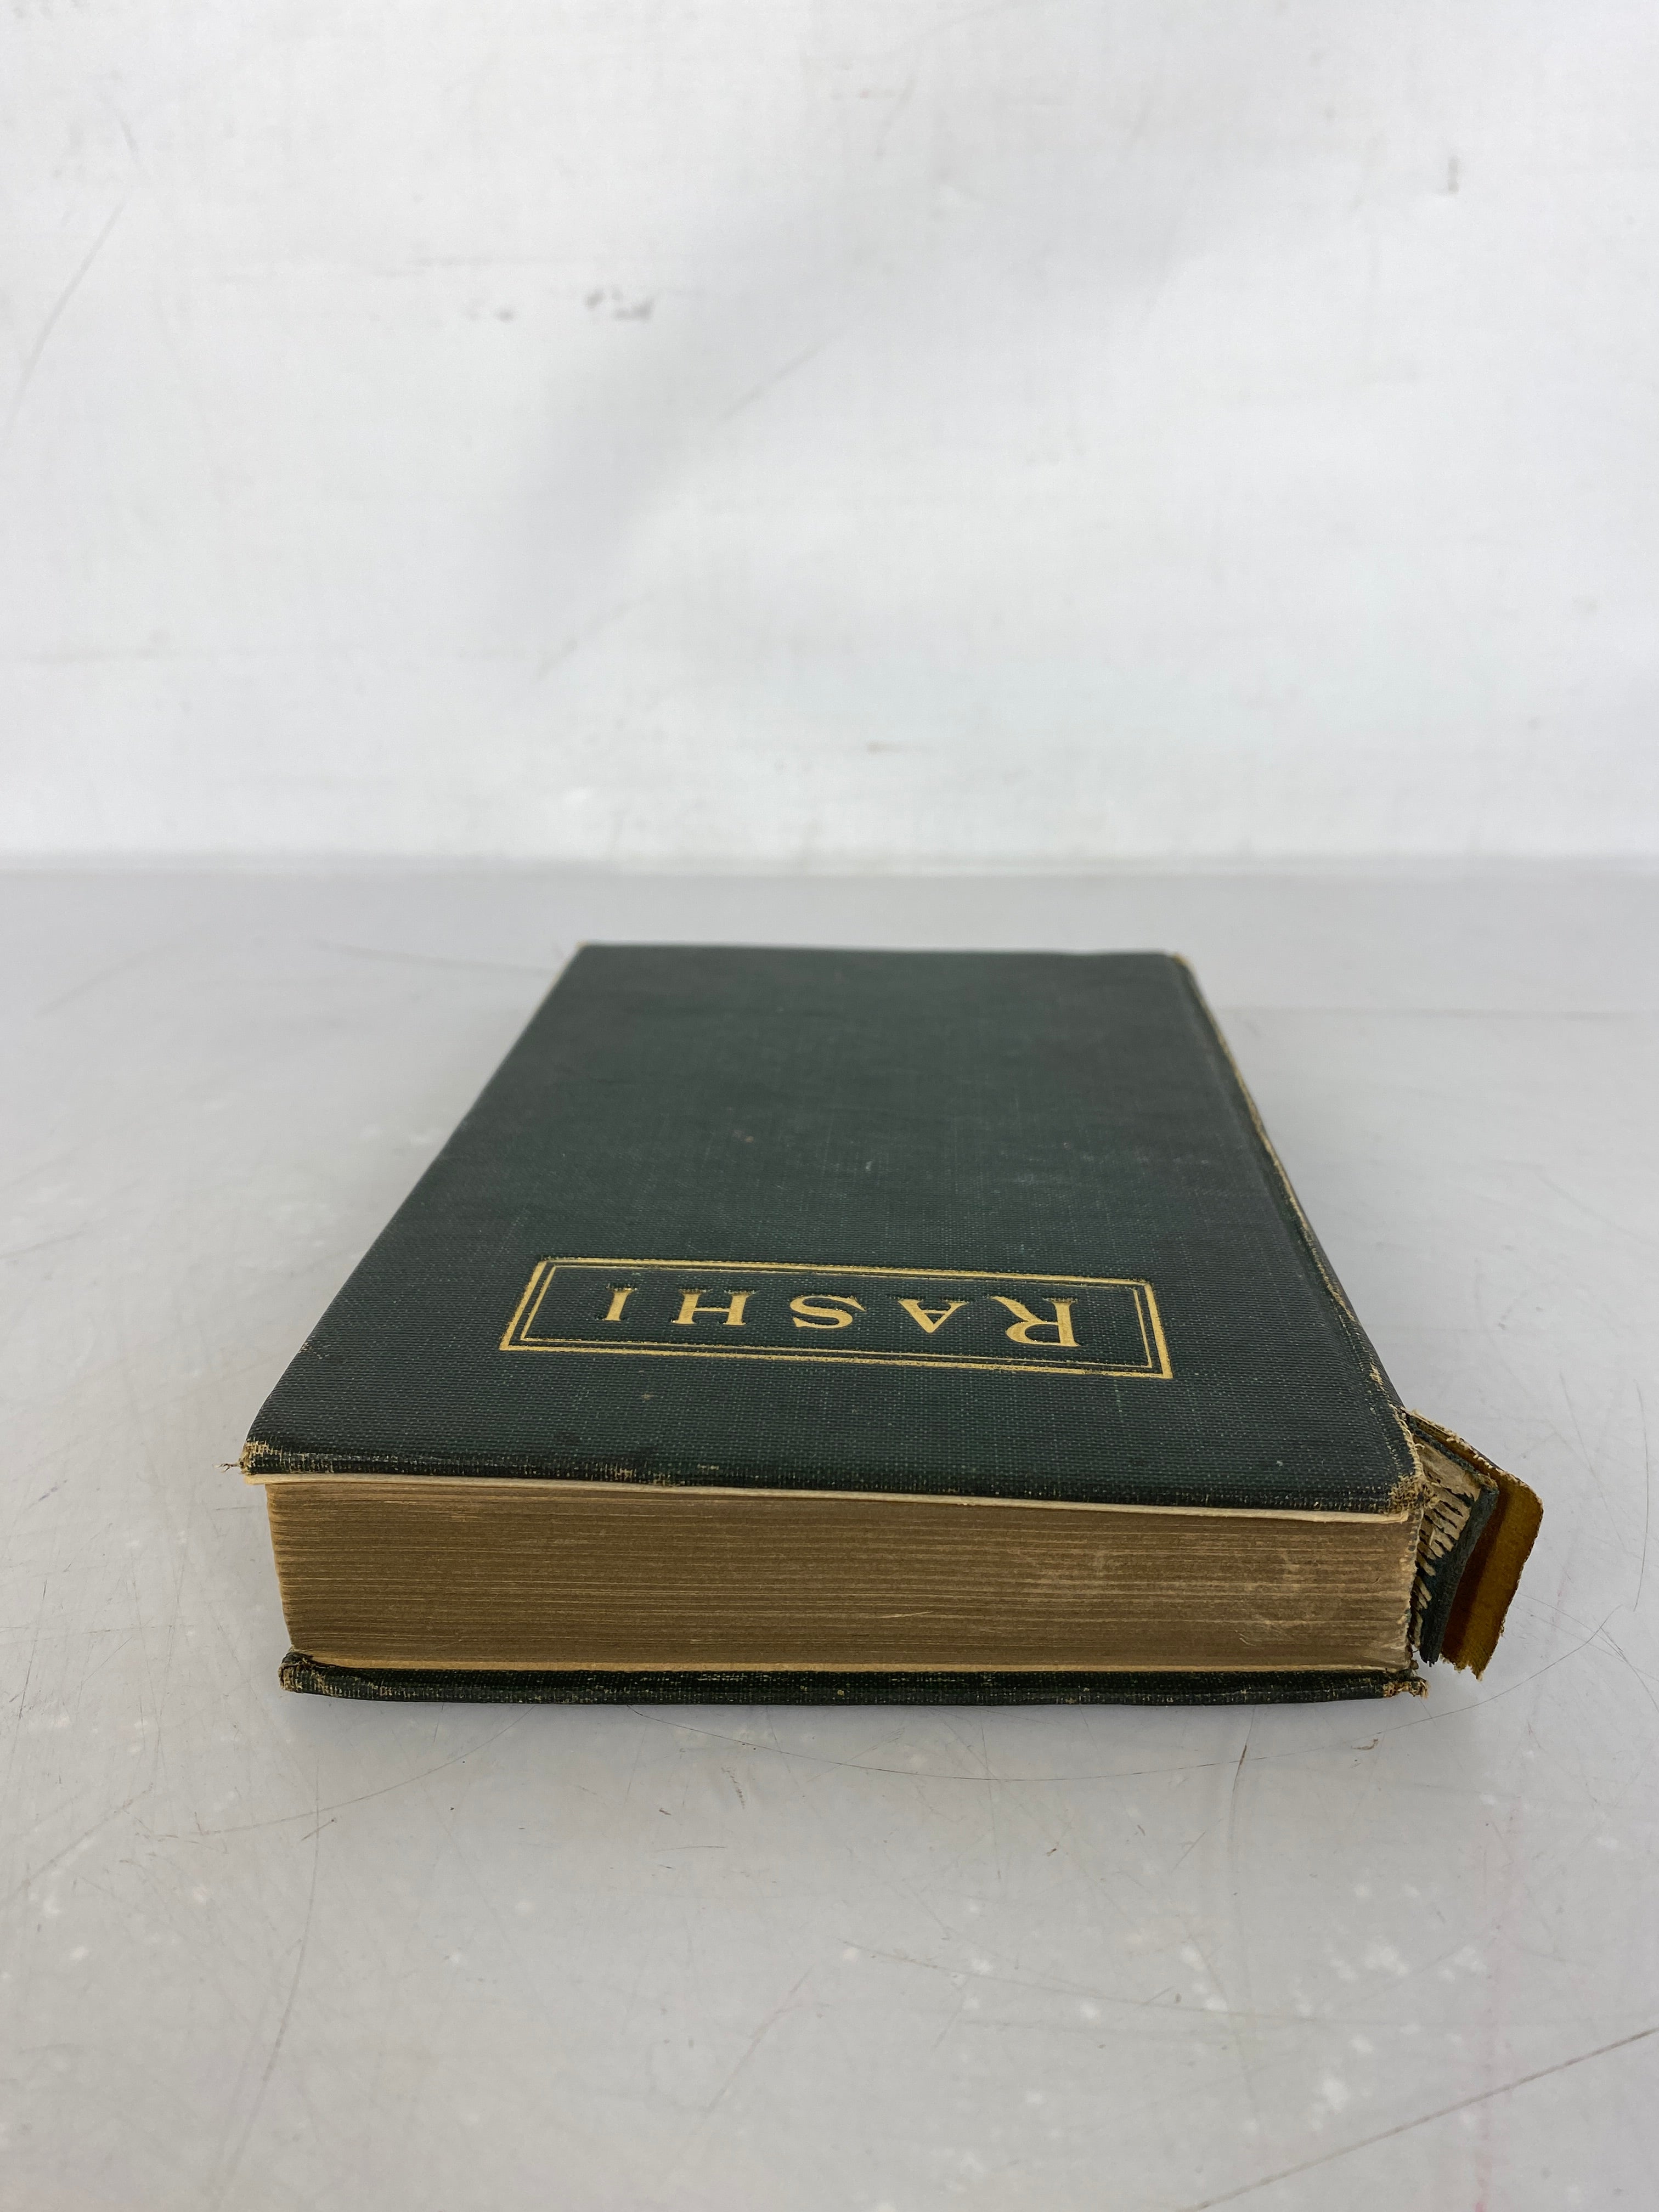 Rashi by Maurice Liber First American Edition 1906 HC